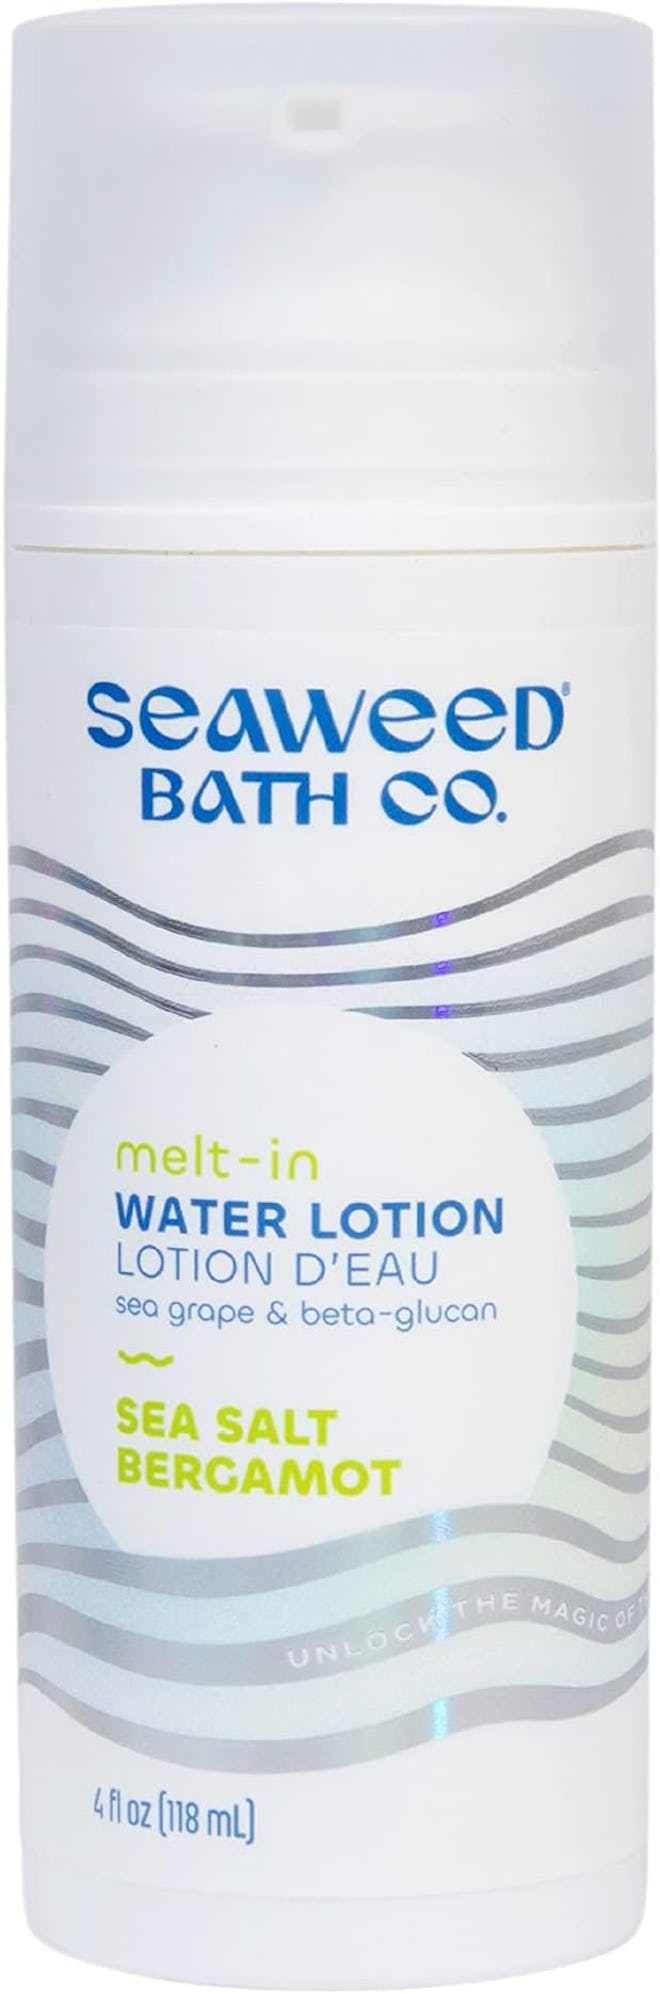 Seaweed Bath Co. Melt-In Water Lotion